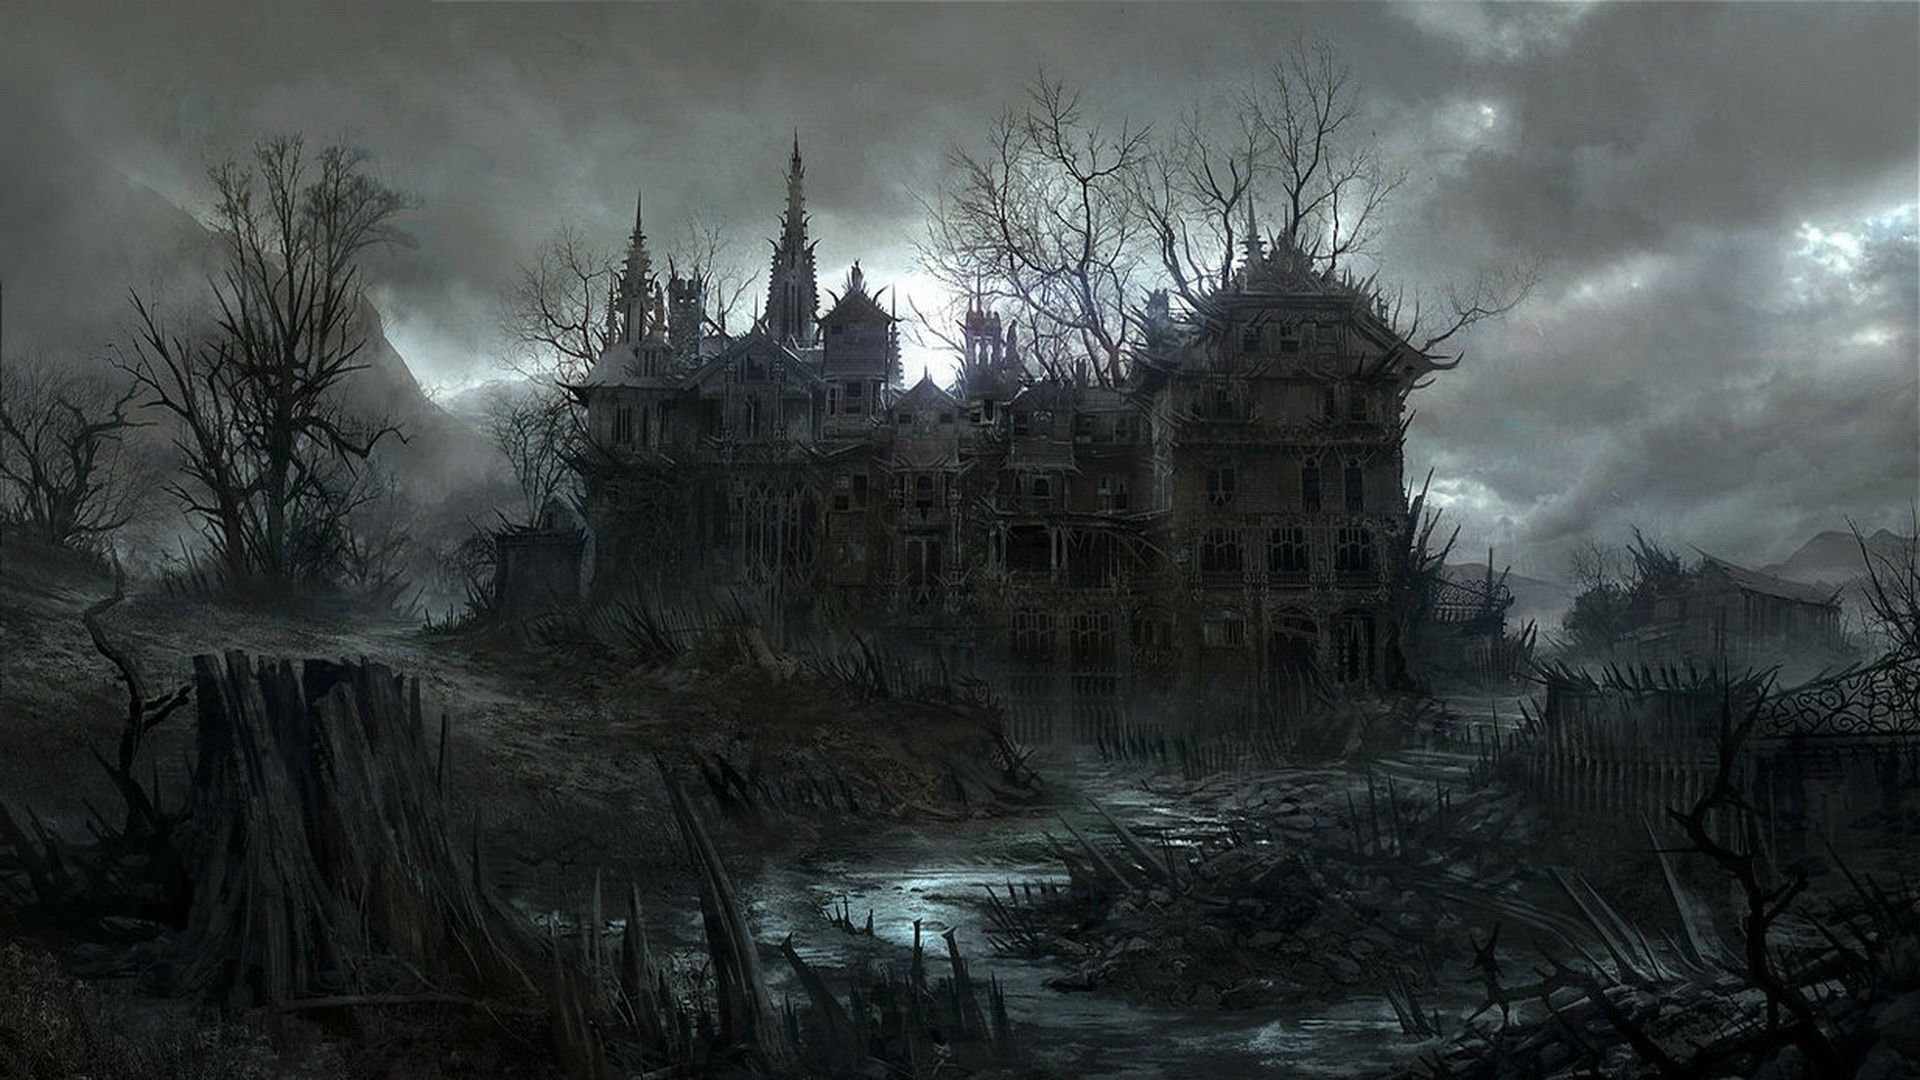 HALLOWEEN dark haunted house spooky wallpaper 1920x1080 497956 1920x1080